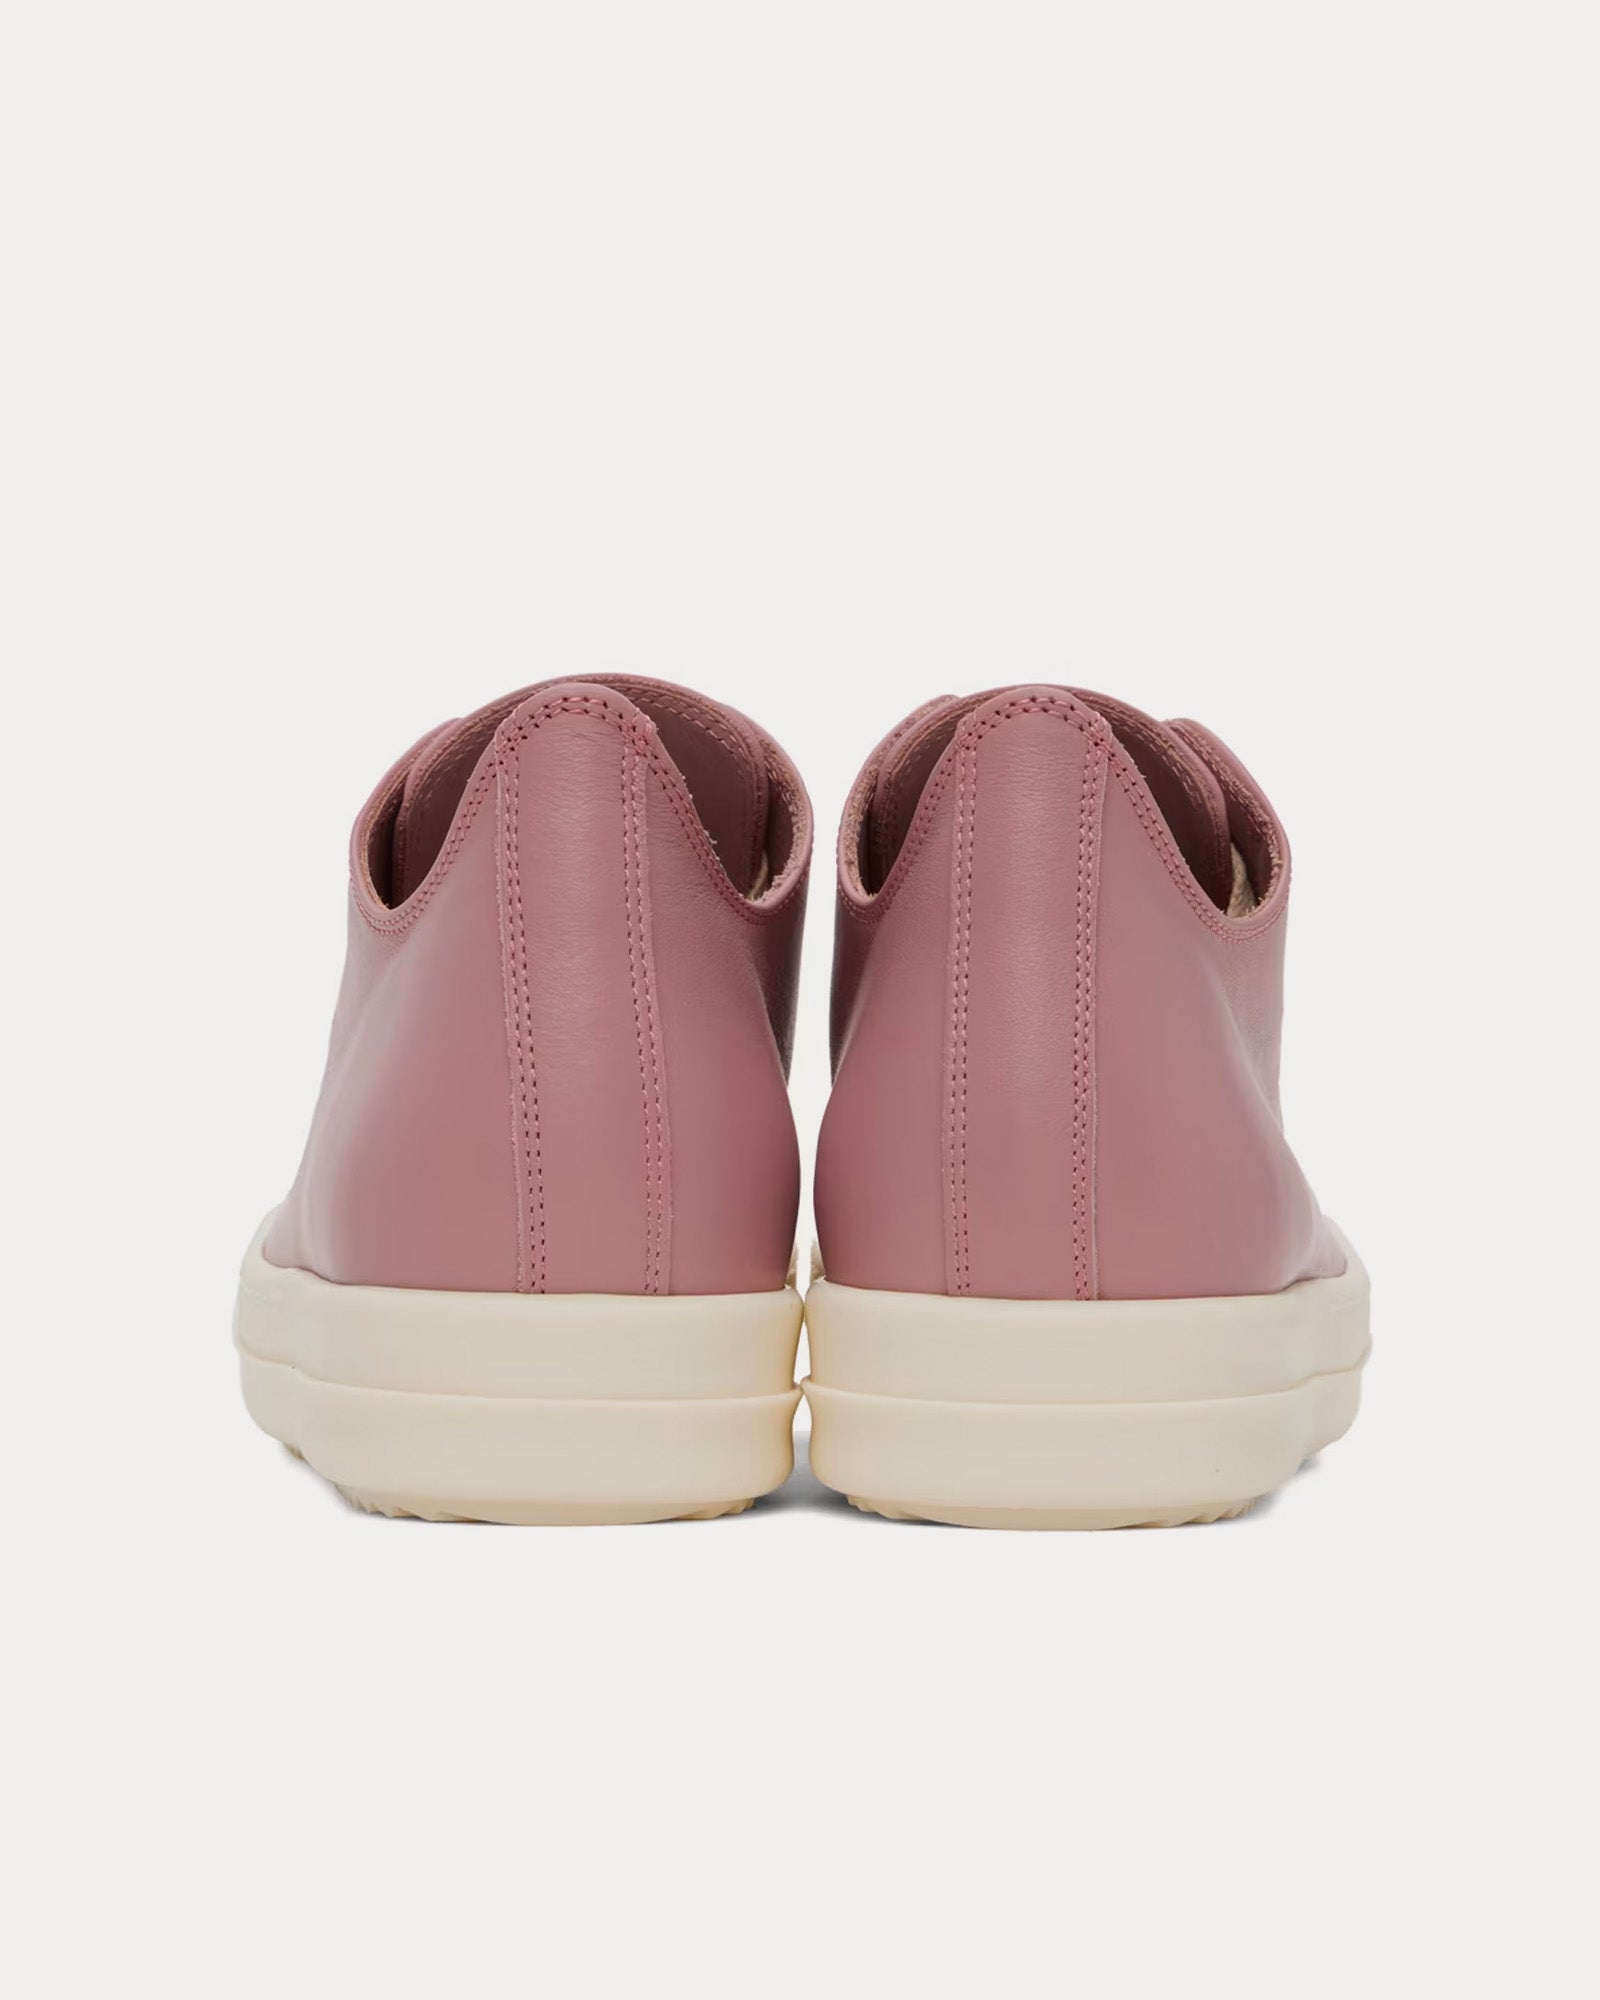 Rick Owens - Leather Dusty Pink / Milk Low Top Sneakers